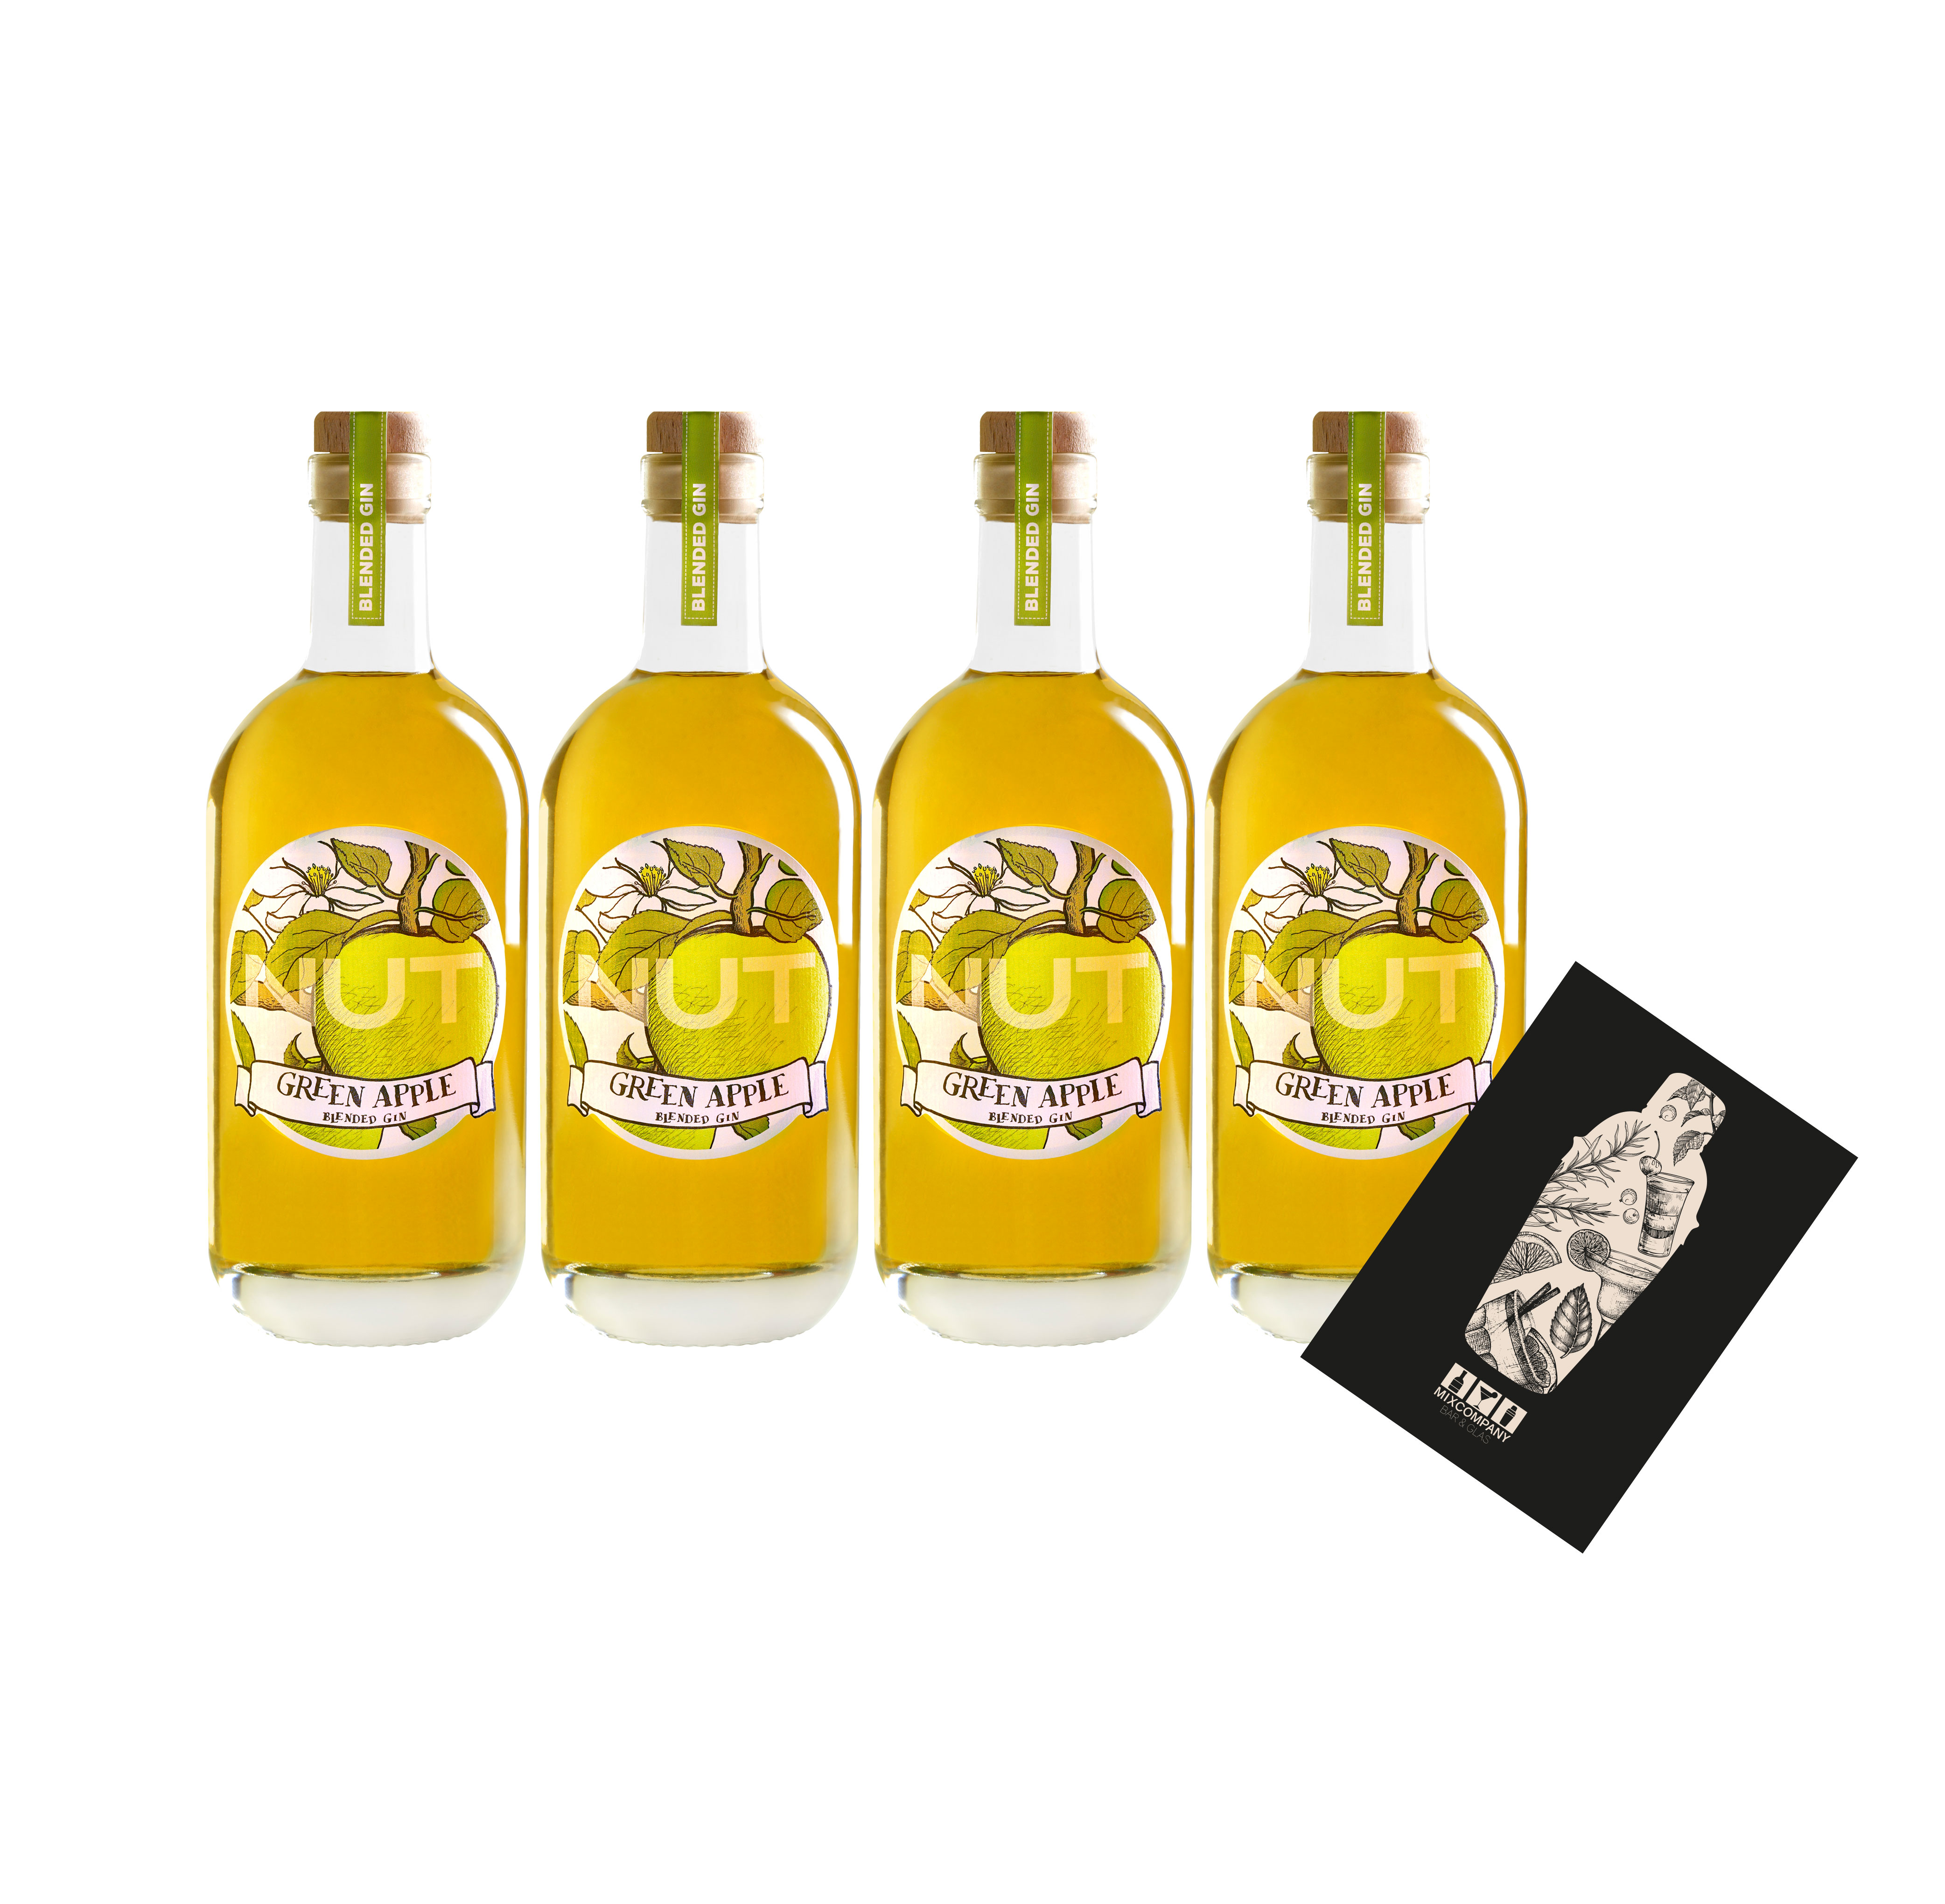 NUT 4er Set Blended Gin Green Apple 4x 0,7L (40% Vol) Grüner Apfel Gin NUT Distillery- [Enthält Sulfite]